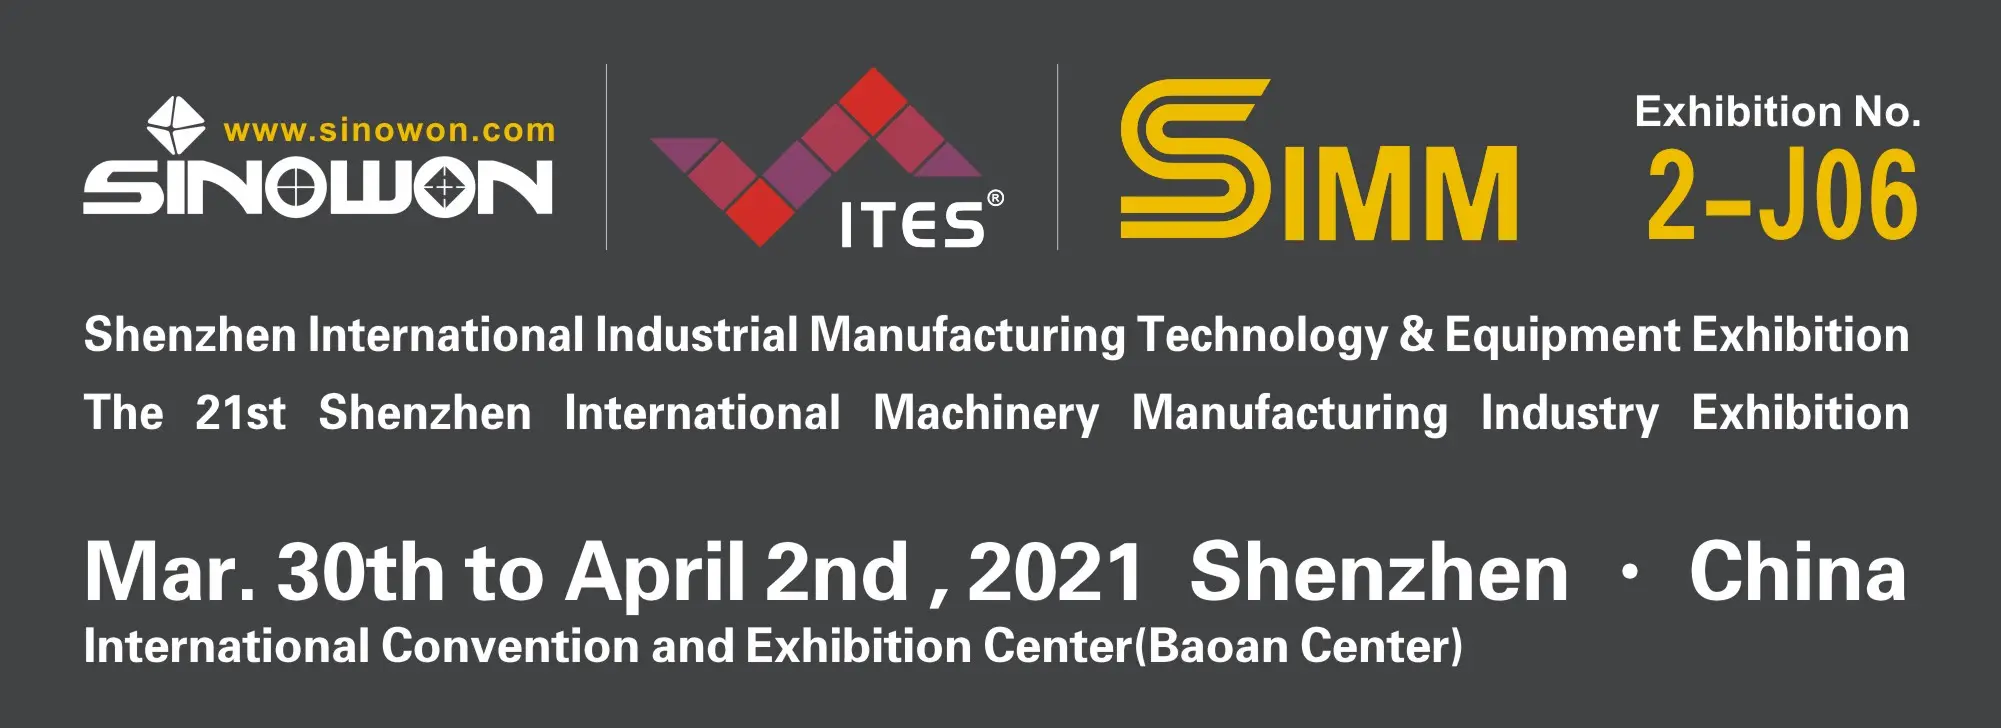 International Industrial Manufacturing Technology & Equipment Exhibition